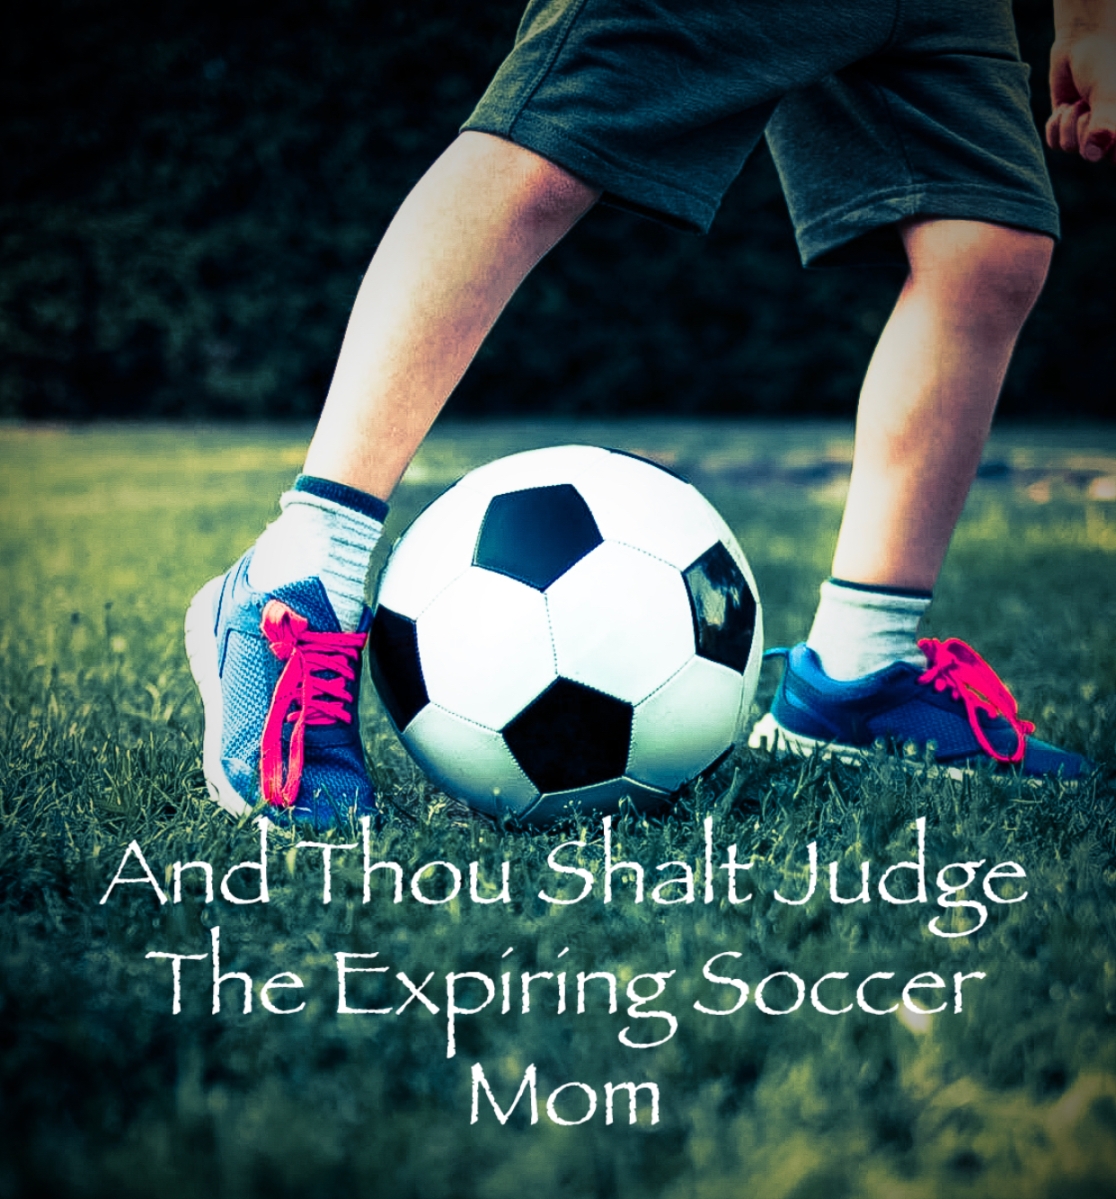 amiel tolentino recommends Horny Soccer Moms Tumblr